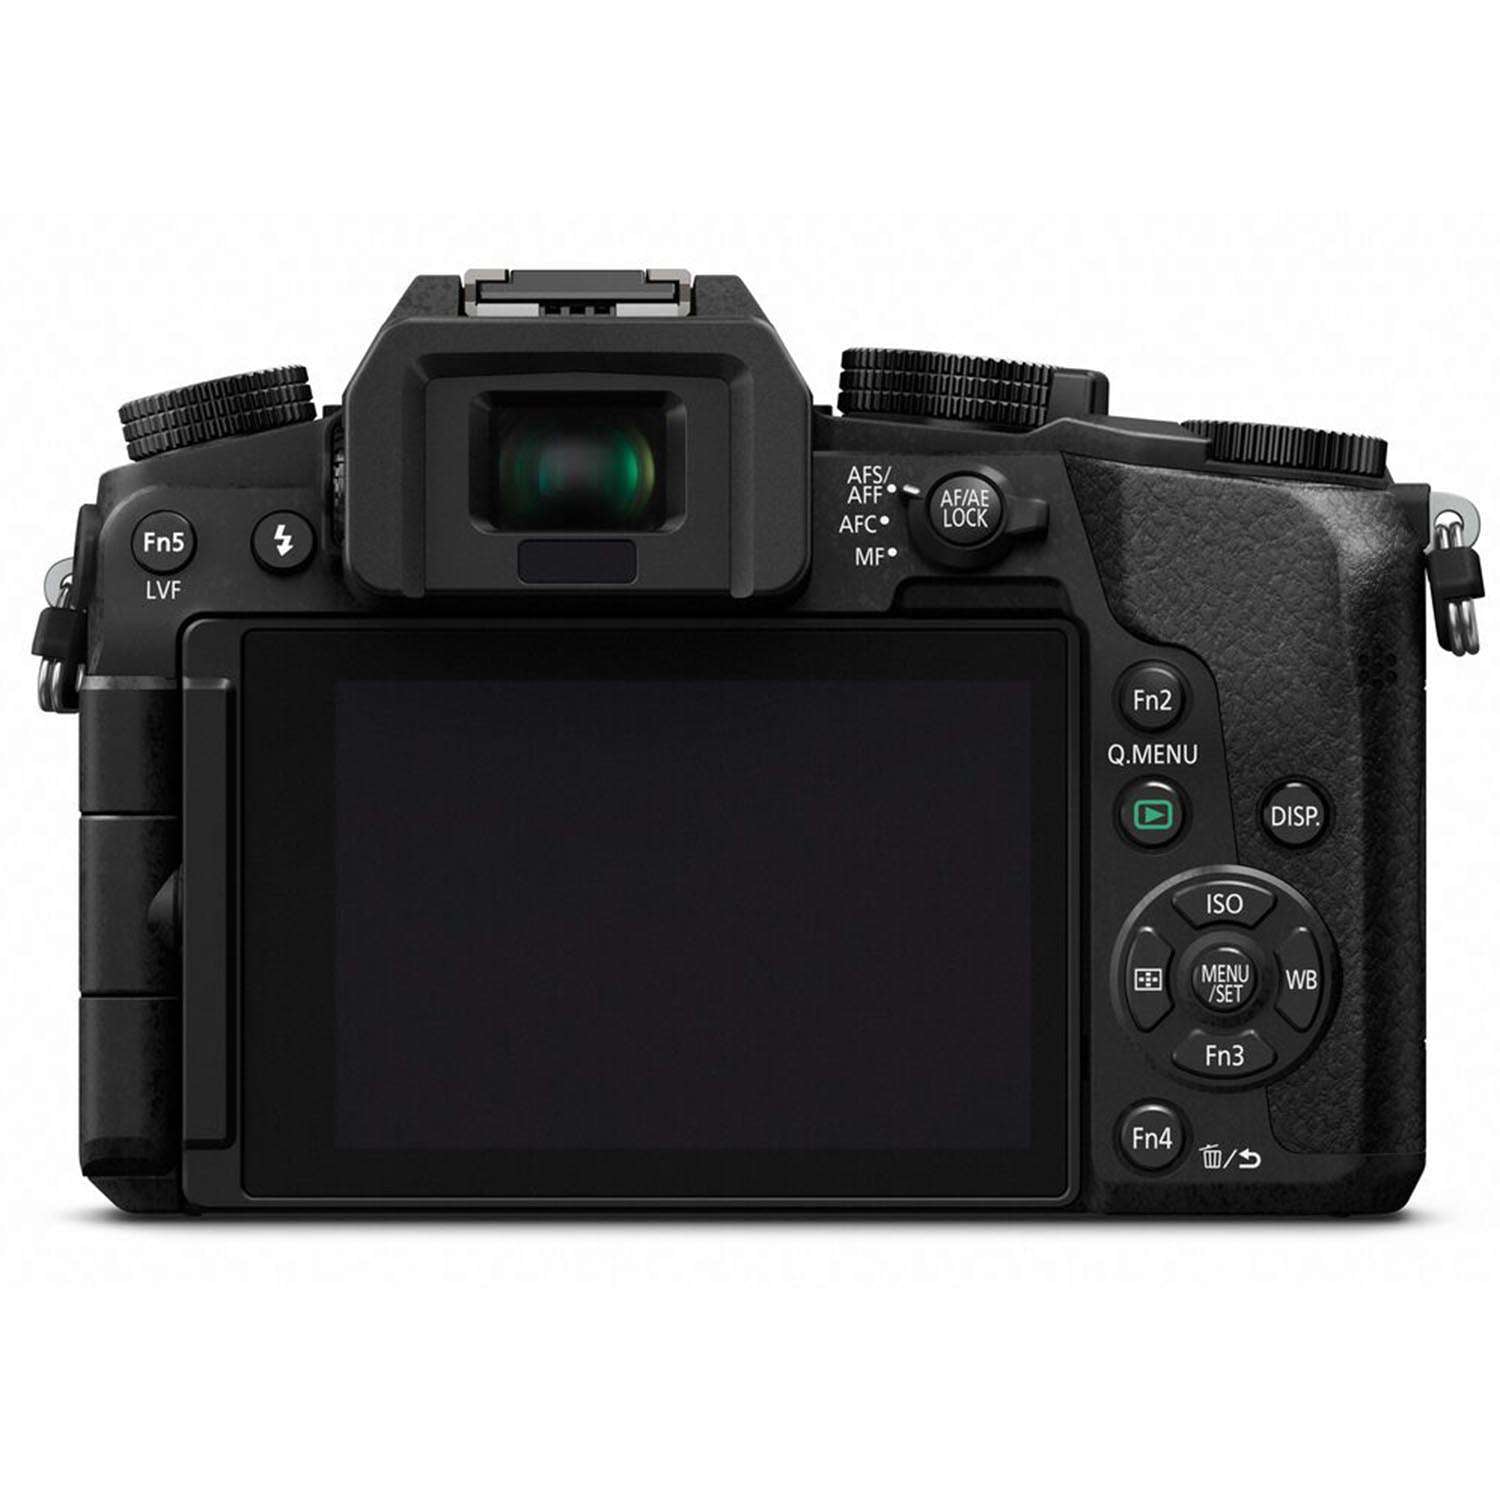 Panasonic G7 with 14-140 kit lens Black